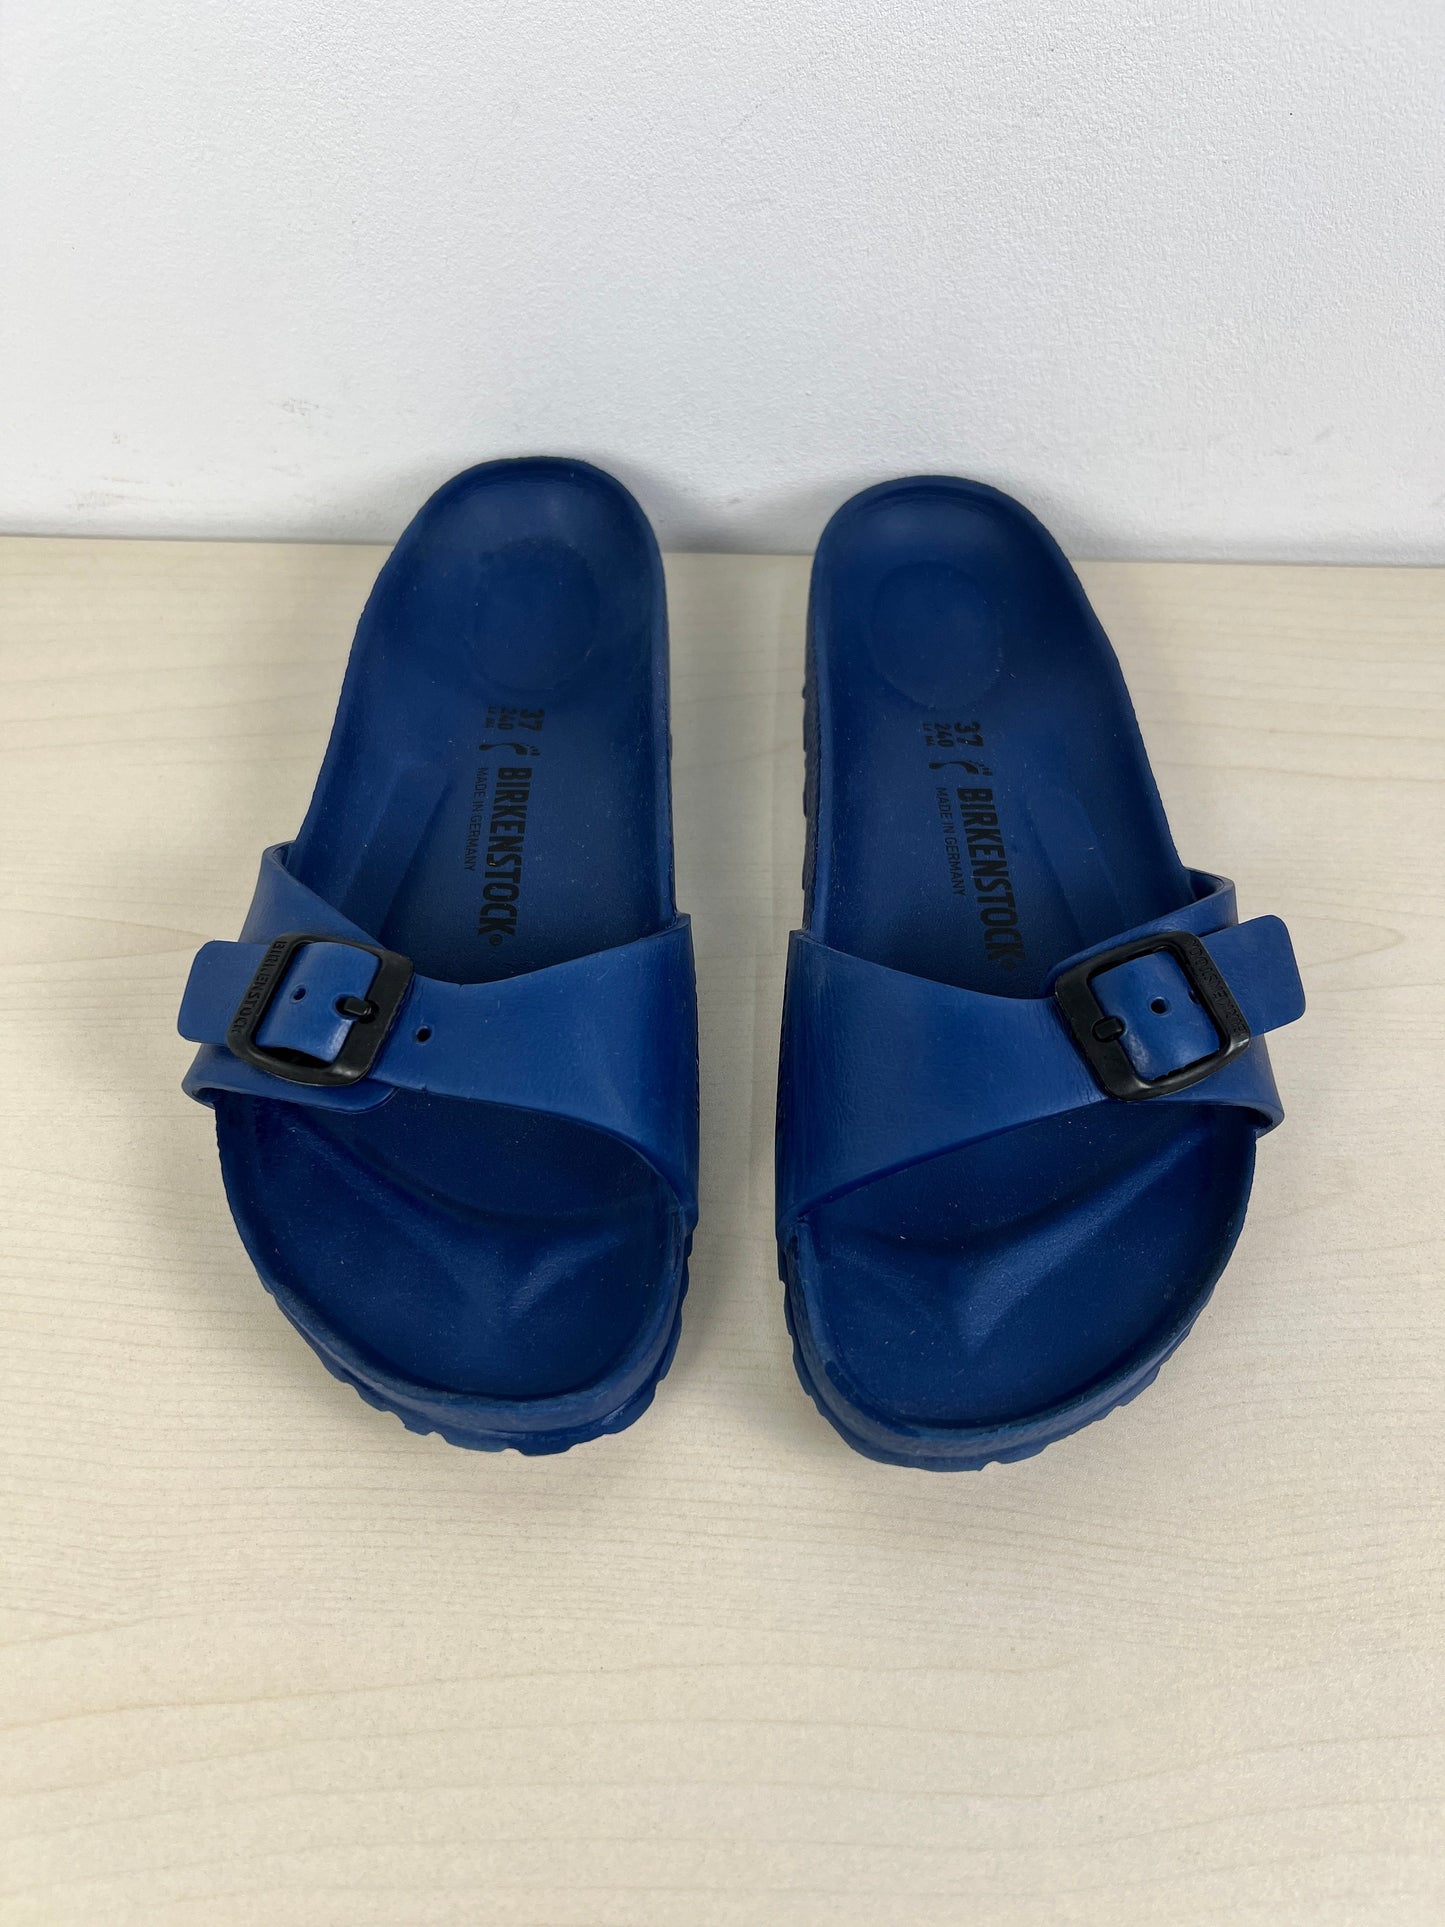 Blue Sandals Sport Birkenstock, Size 7